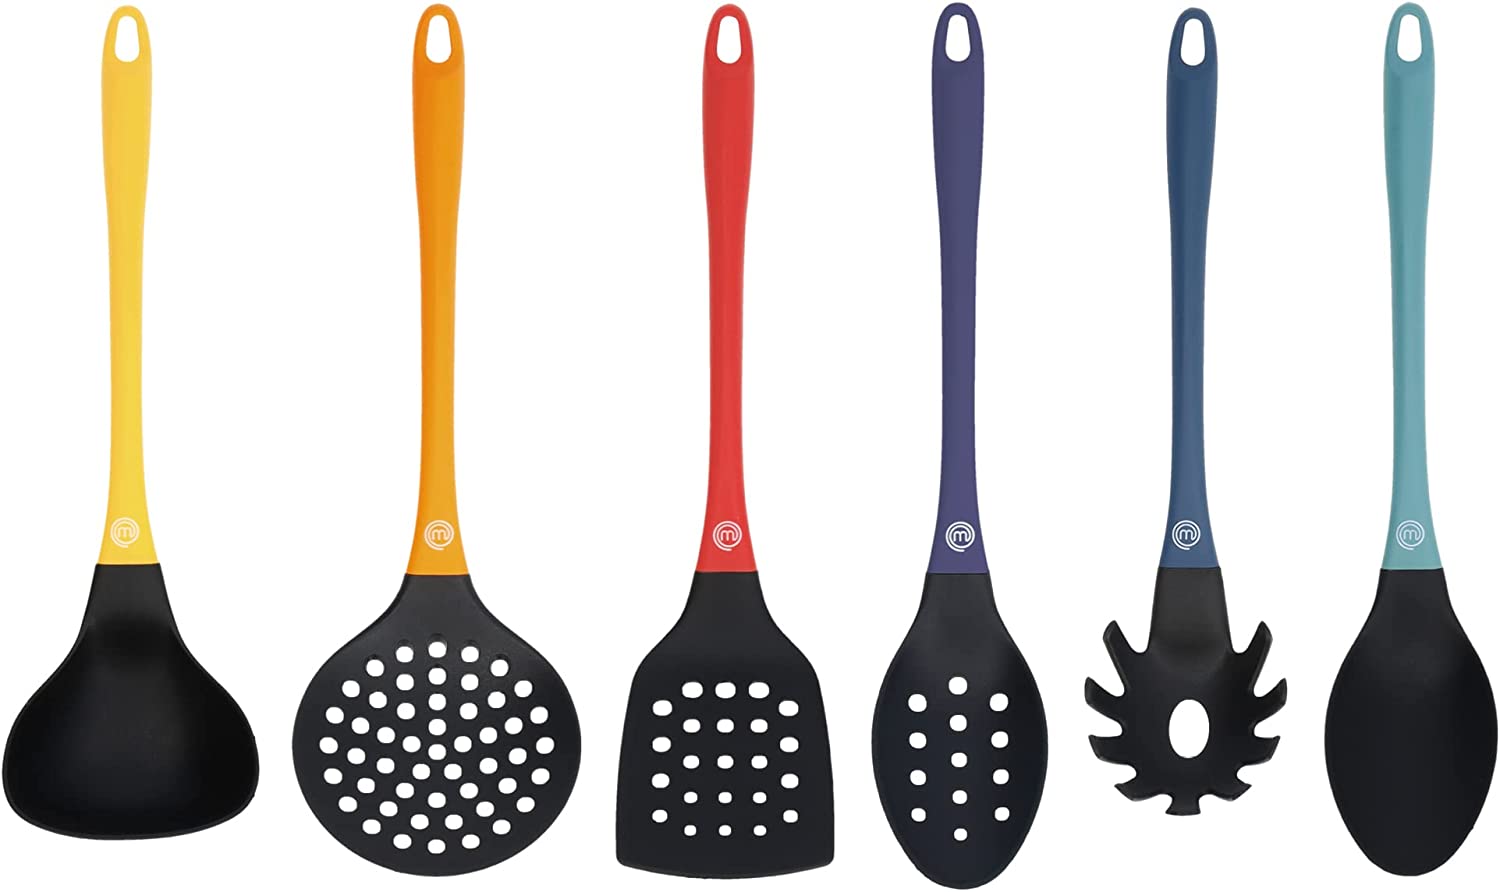 Meyer Everyday Nylon Tools / Cooking Utensils Set, 6 Piece, Black with Gray  Handles